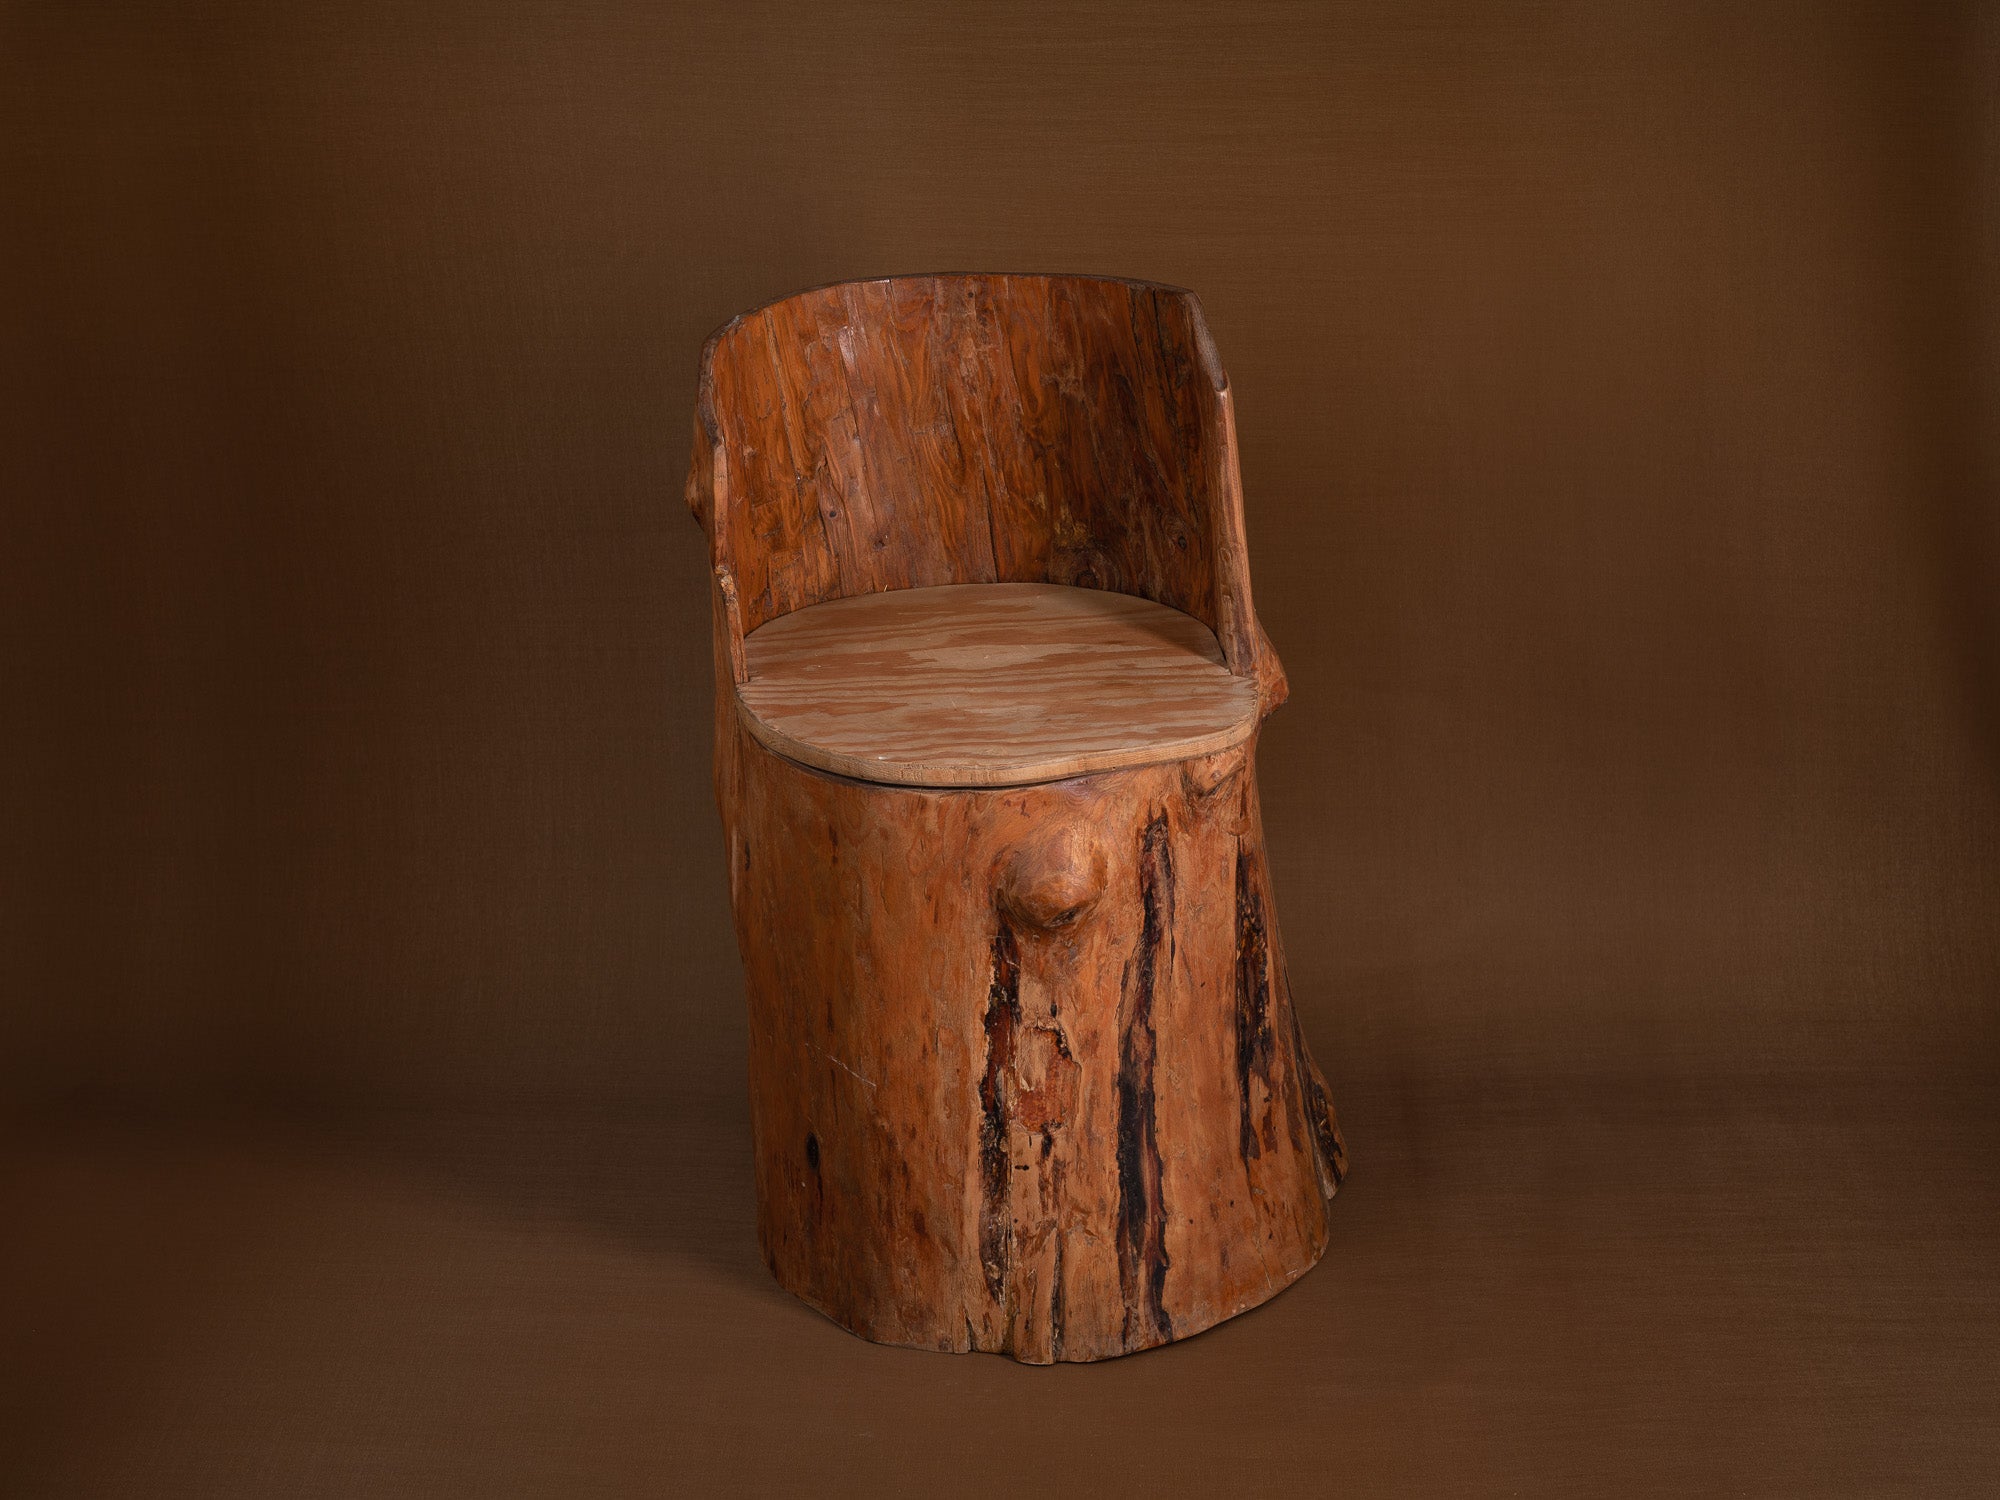 Fauteuil monoxyle paysan Kubbstol, Suède (début du XXe siècle)..Kubbstol, Peasant carved wooden chair, Sweden (early 20th century)